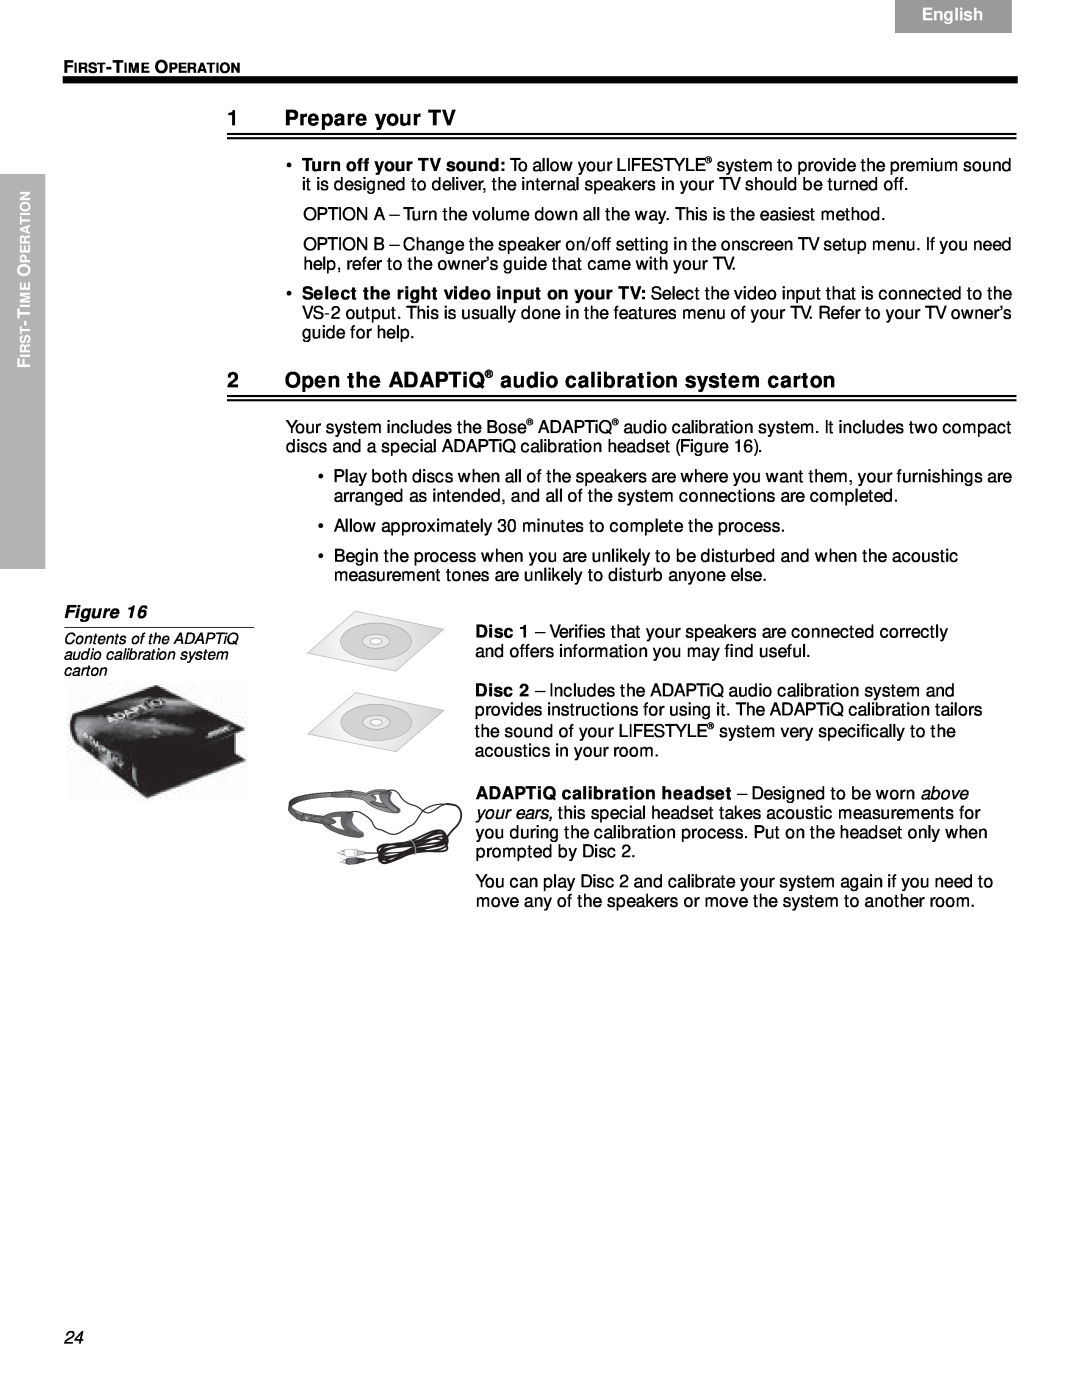 Bose VS-2 manual 1Prepare your TV, 2Open the ADAPTiQ audio calibration system carton, Nederlands, Svenska, English, Figure 